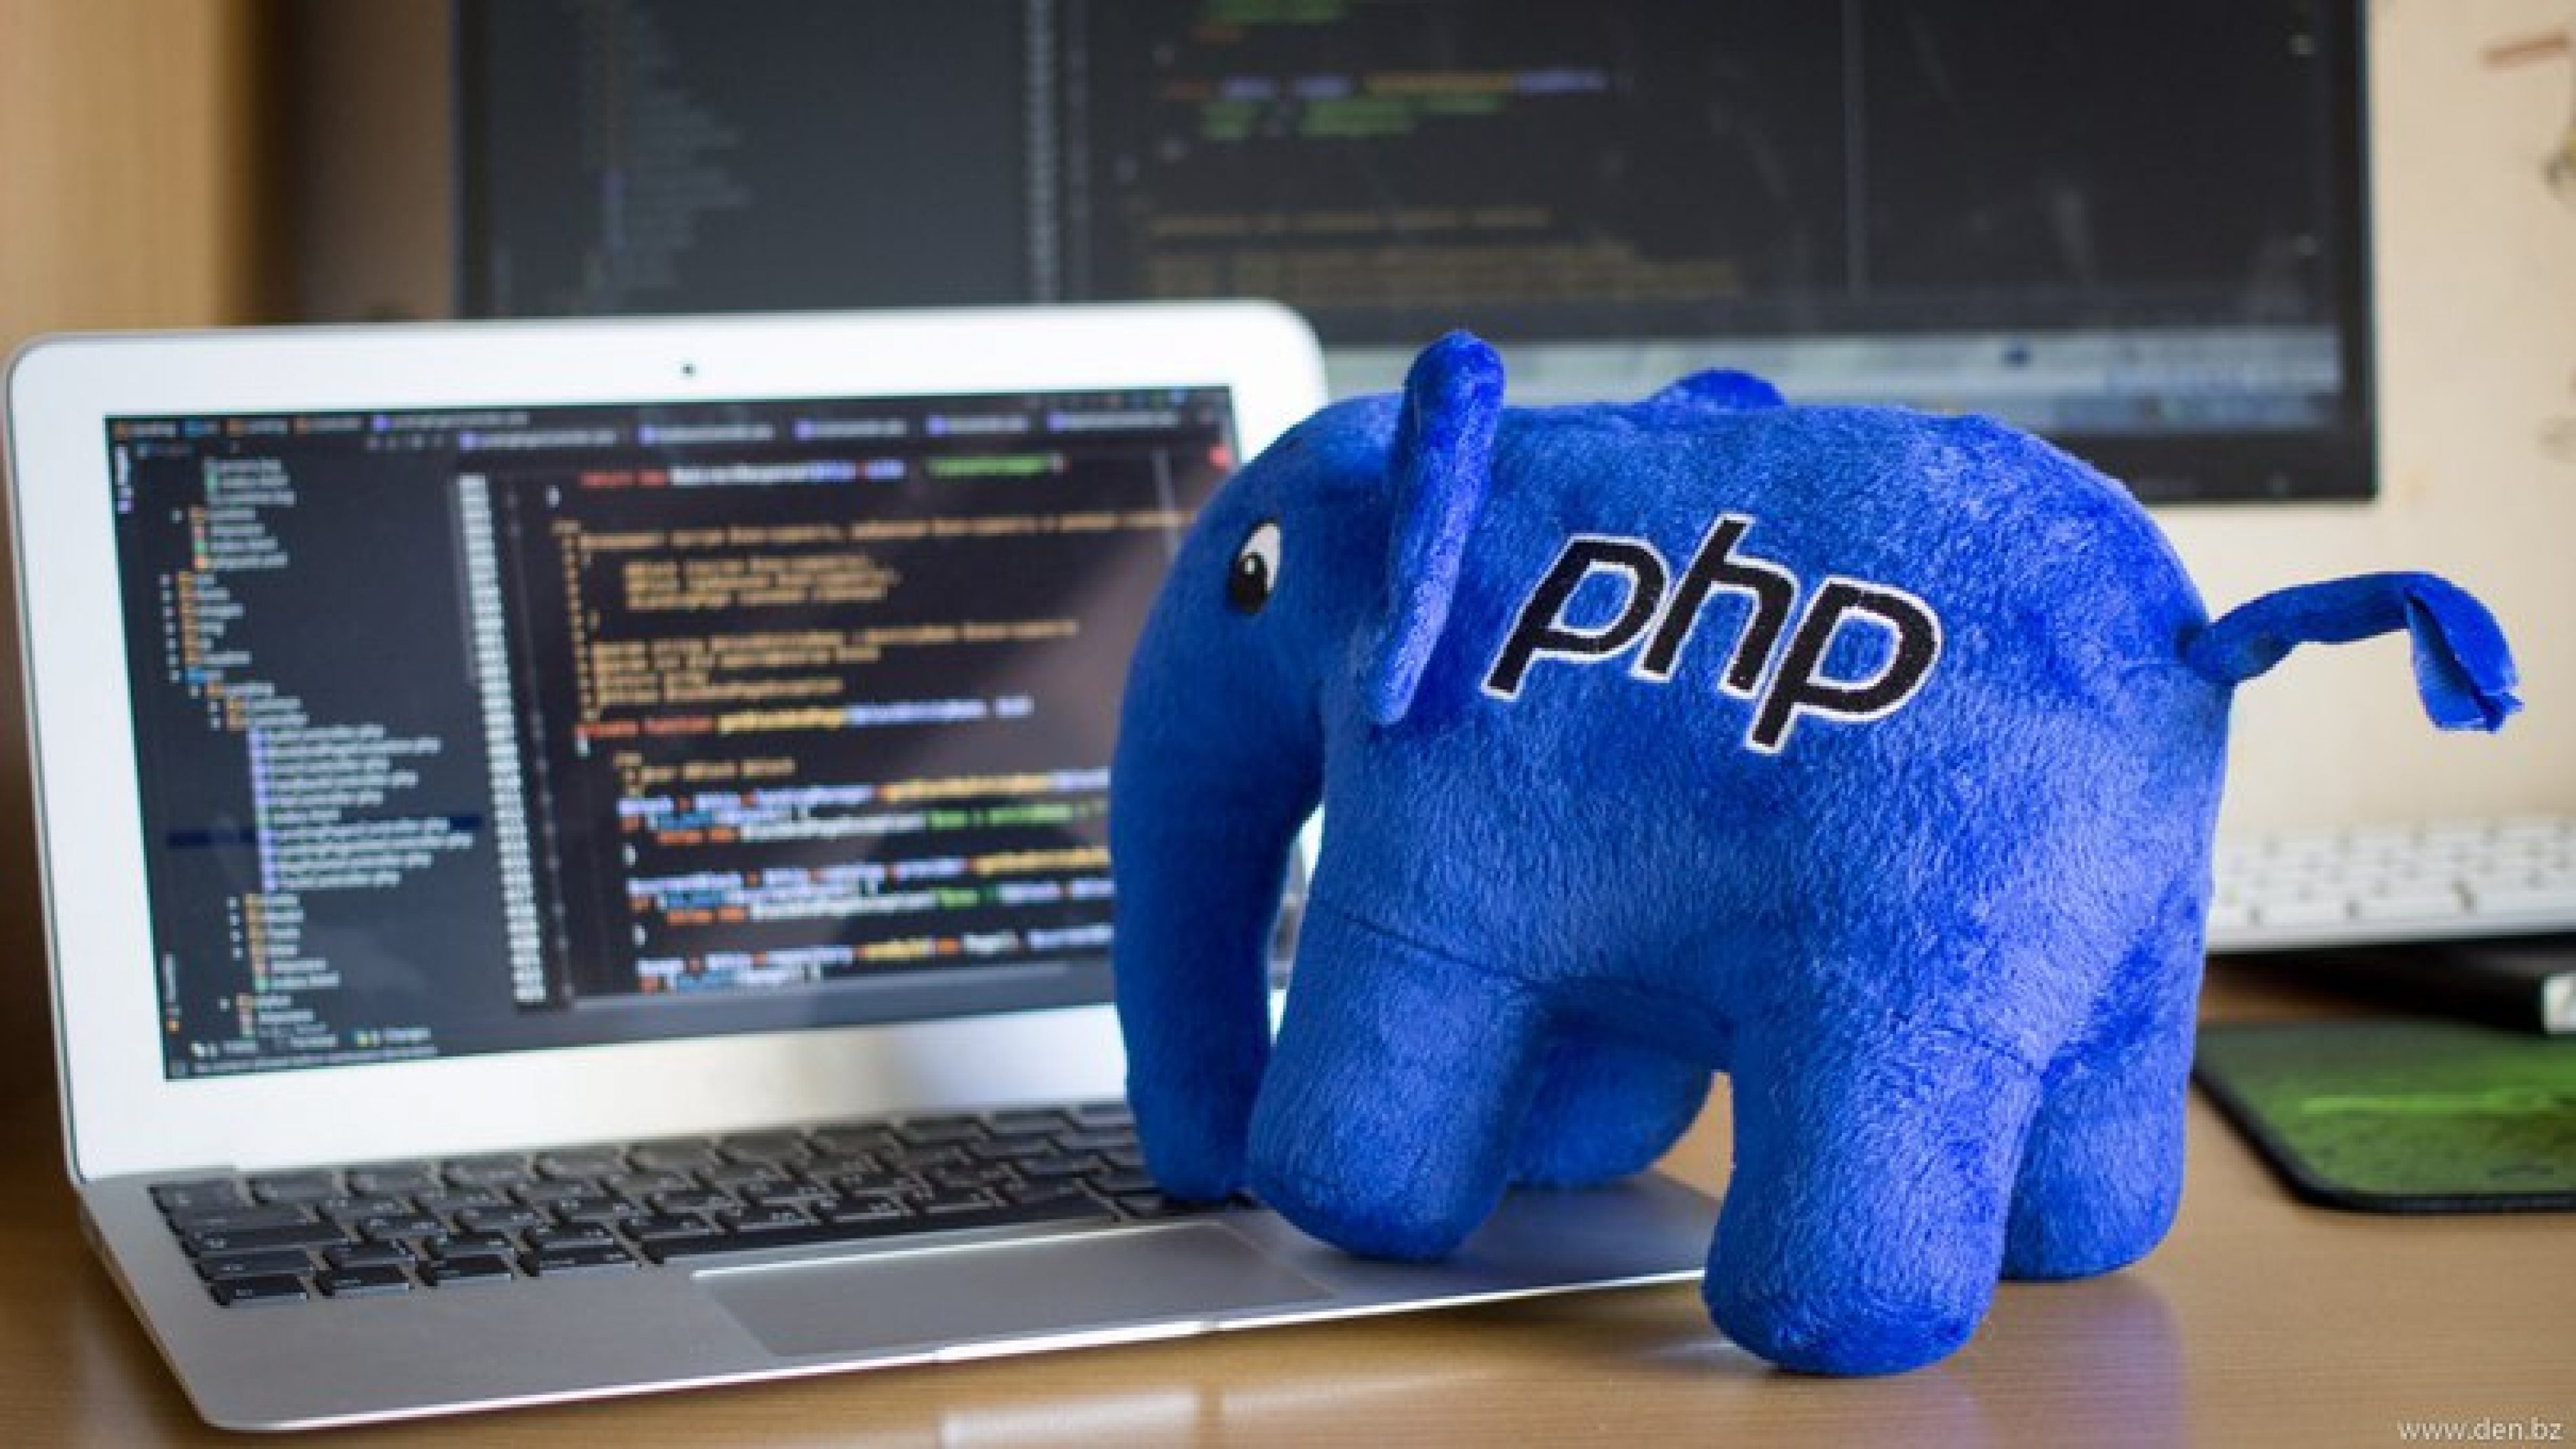 Php 7.0. Php слон. Php картинка. Значок php. Php будущее.